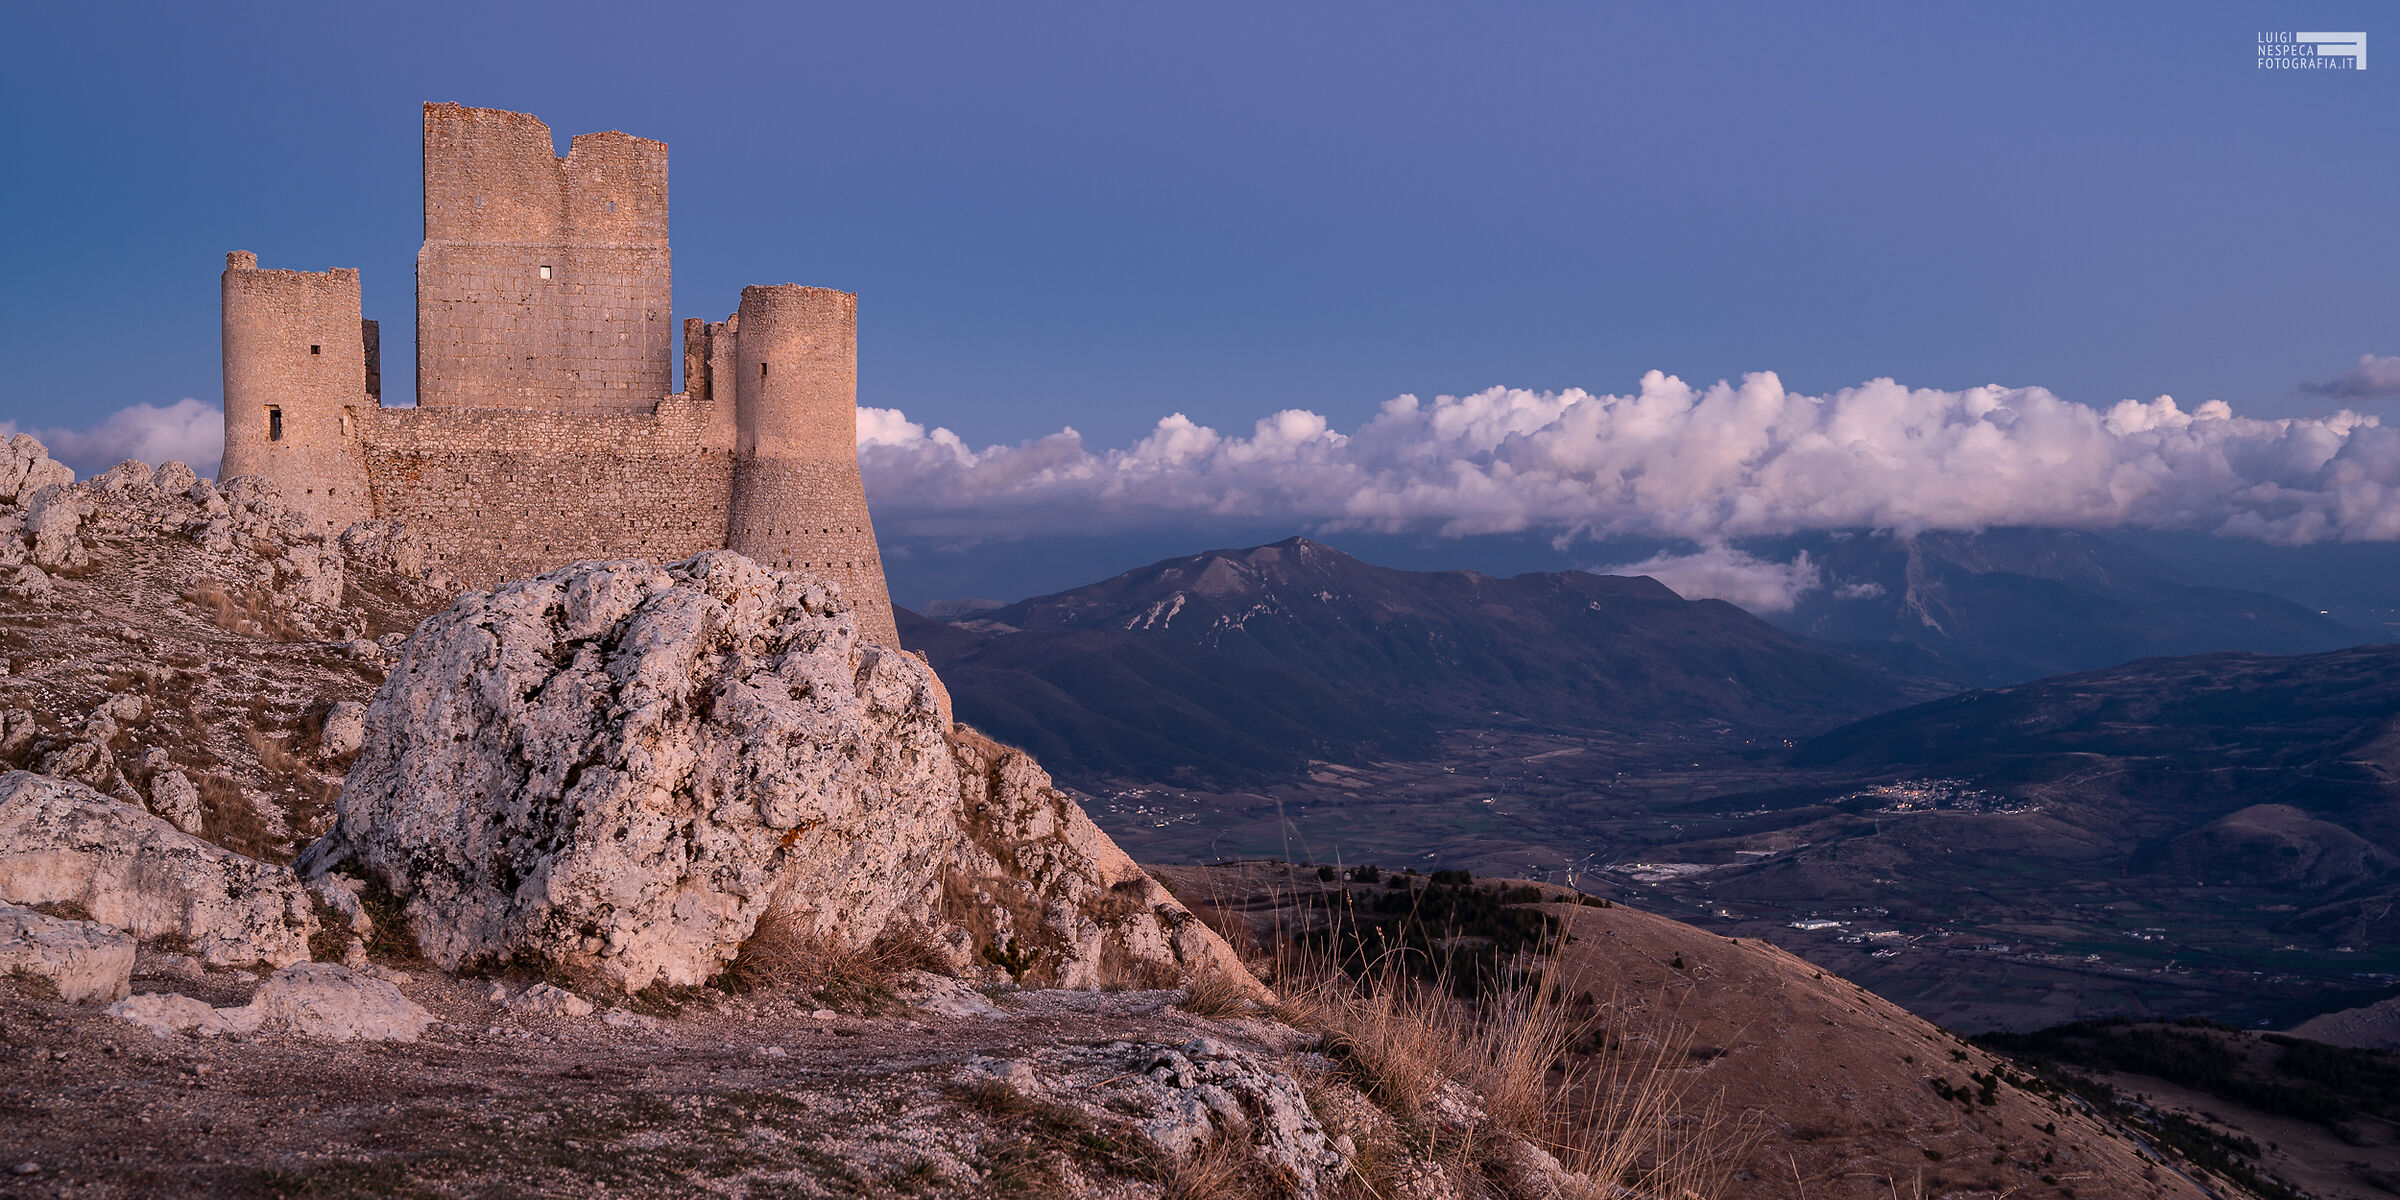 The castle of Rocca Calascio - Twilight...